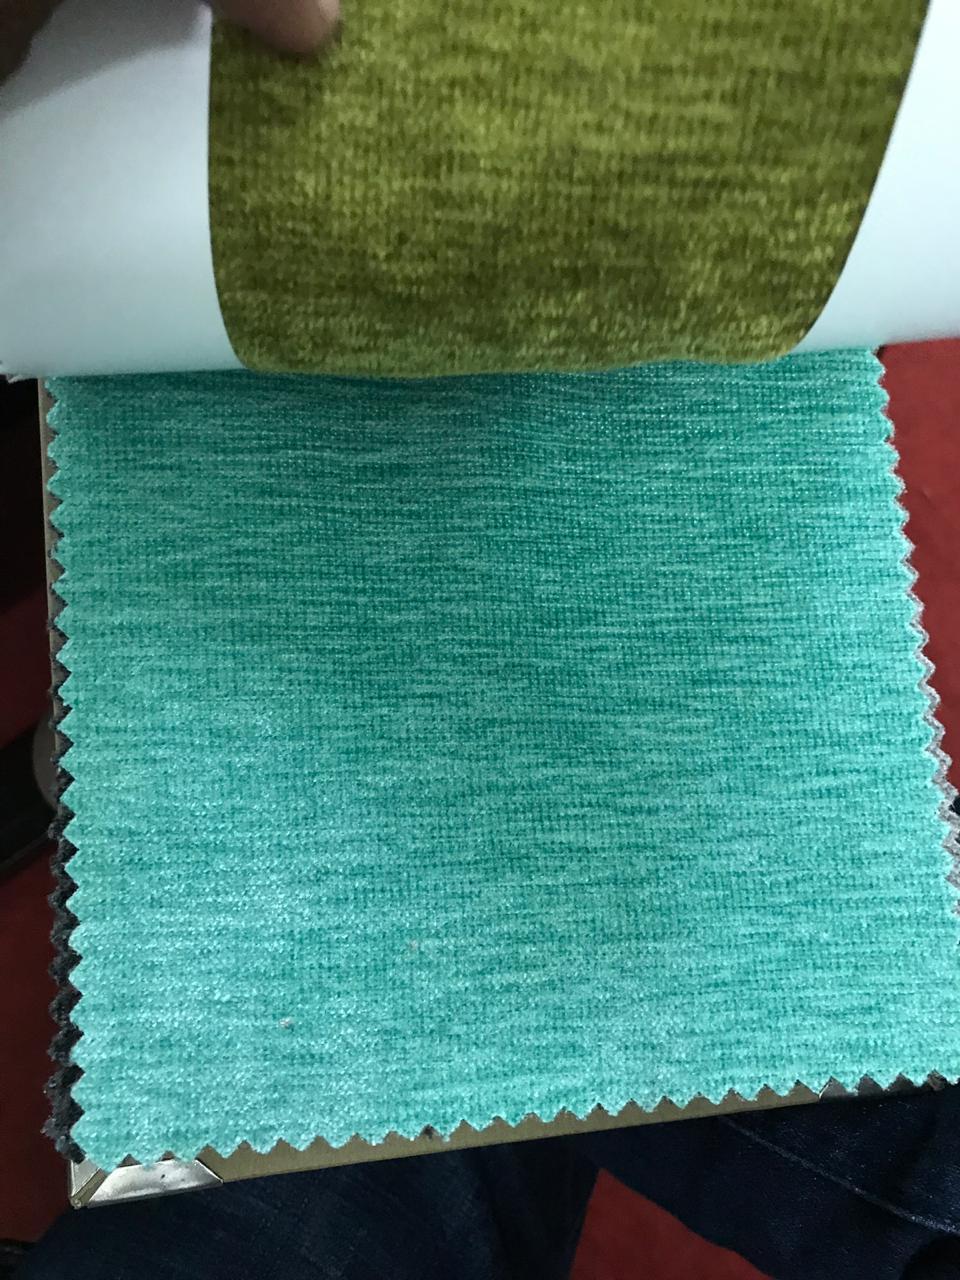 Molphino Sofa fabric